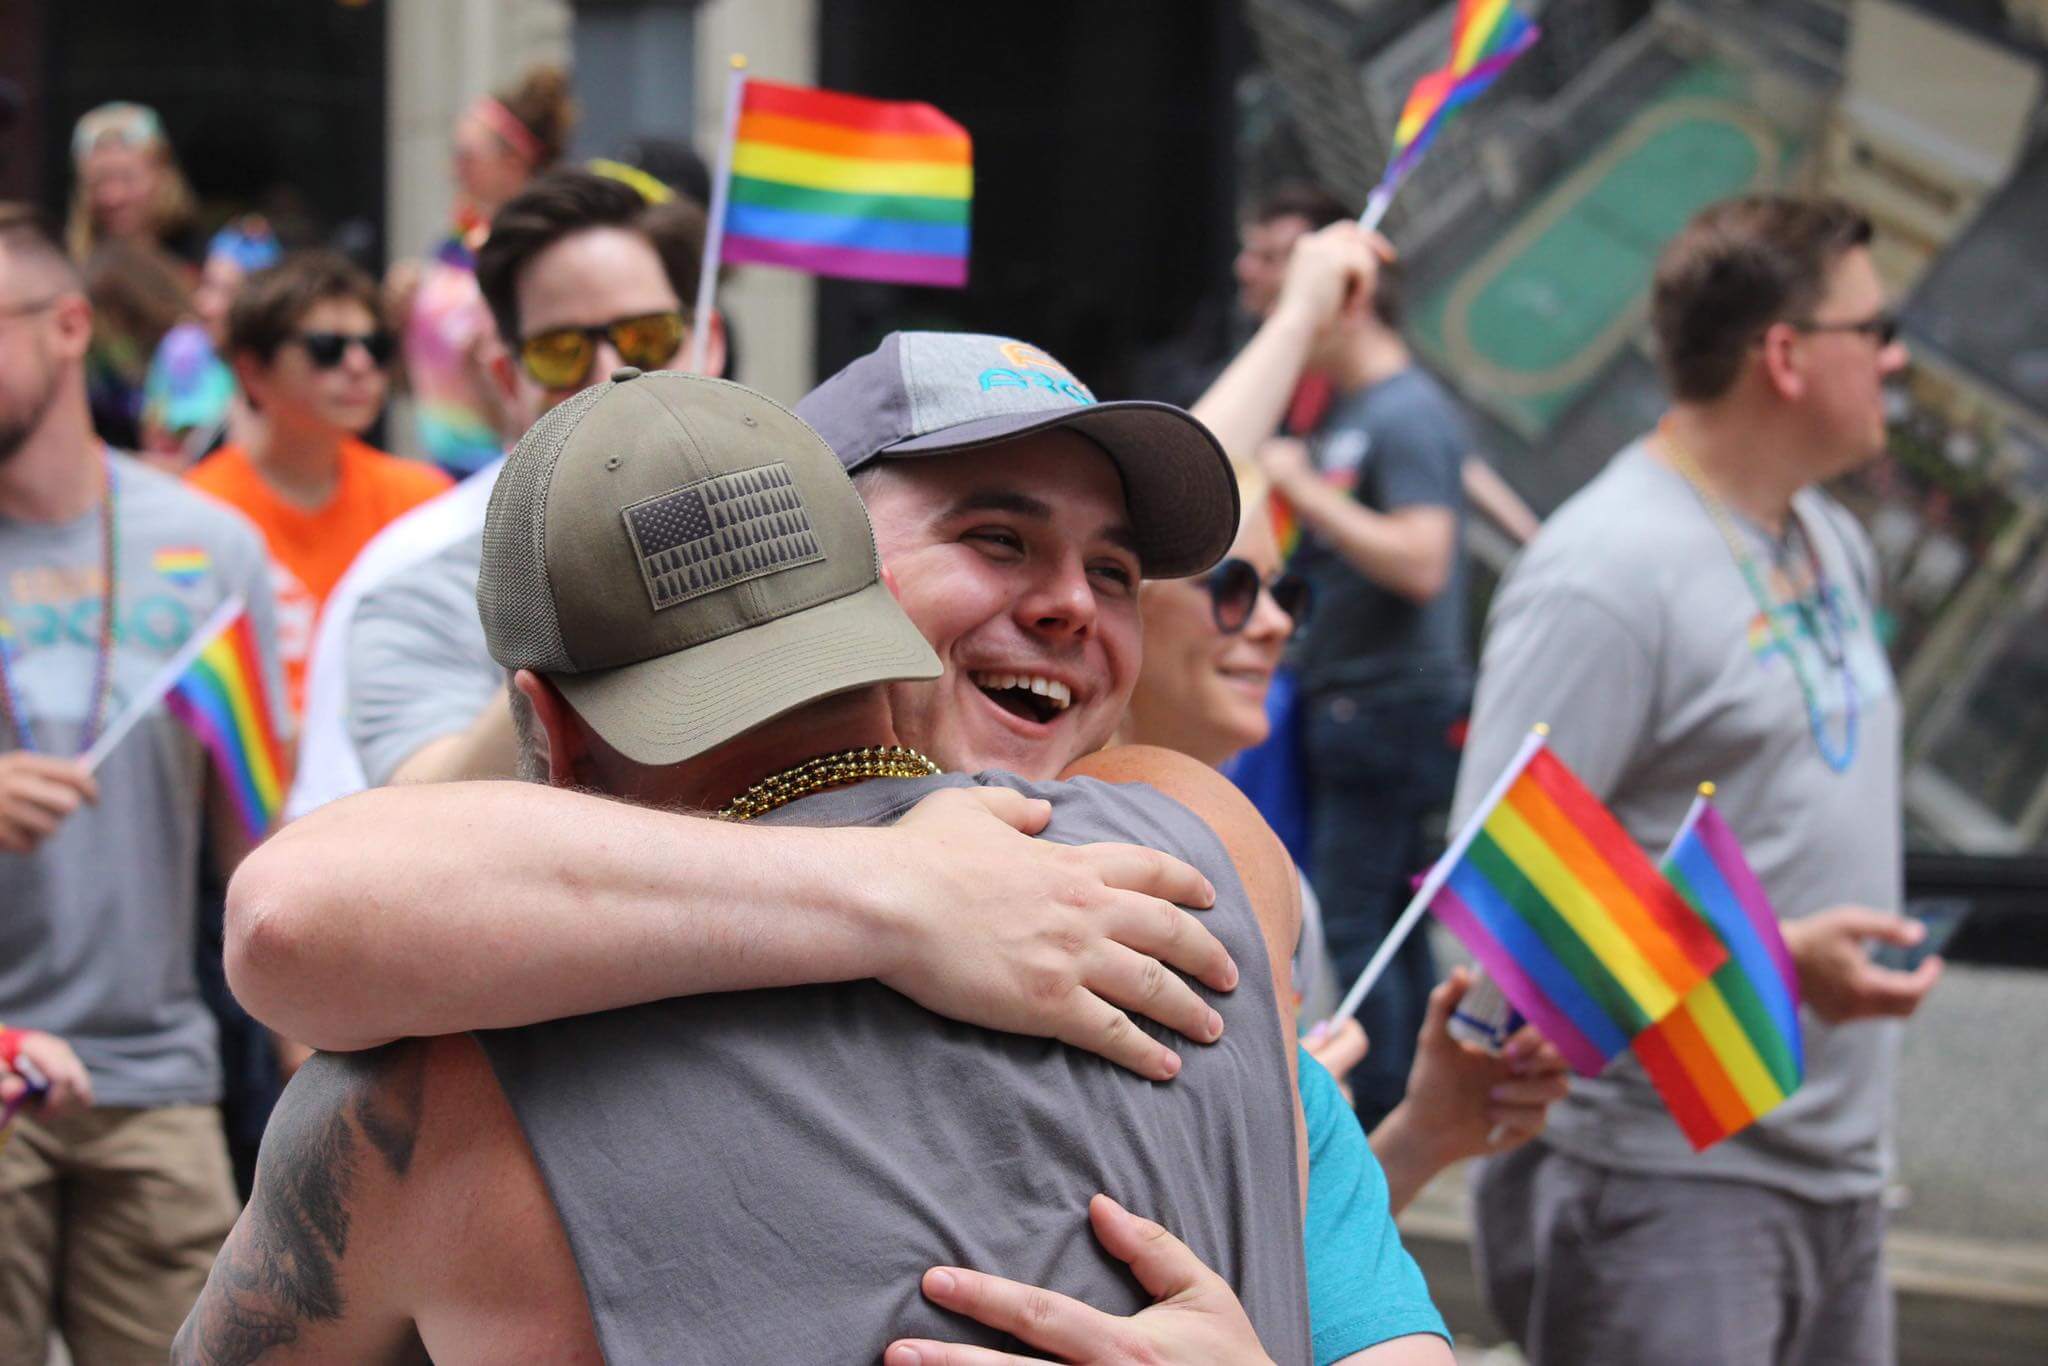 Pride, papà regala abbracci ai ragazzi gay rifiutati dai propri genitori - gay pride abbraccio papa%CC%80 1 - Gay.it